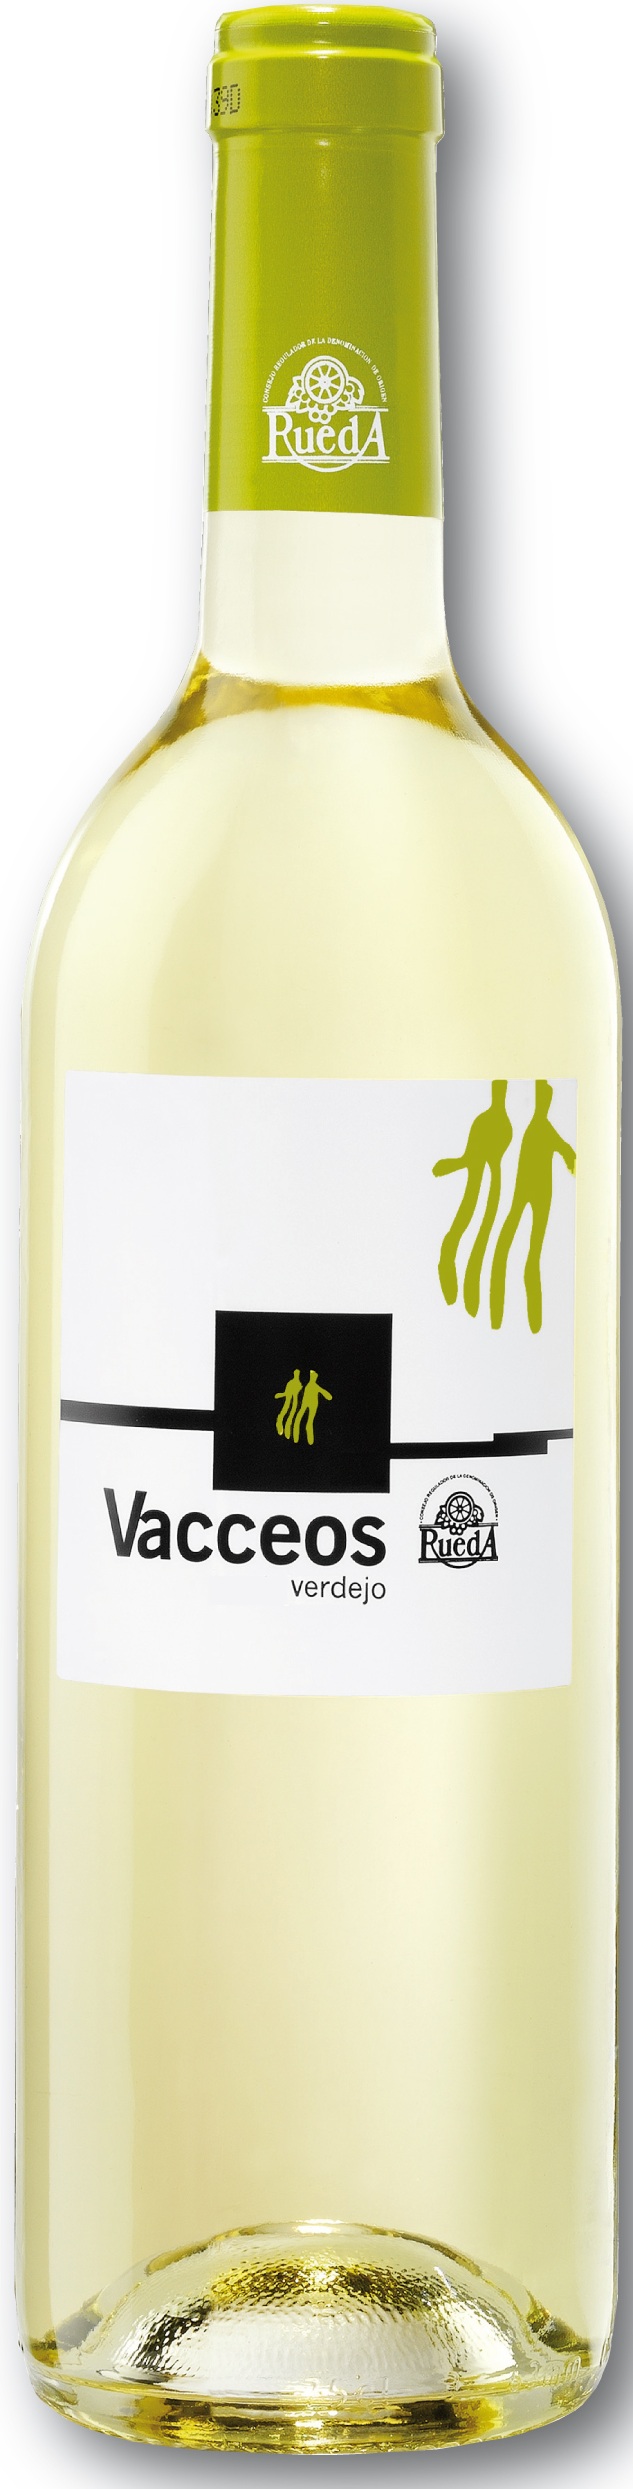 Image of Wine bottle Vacceos Verdejo